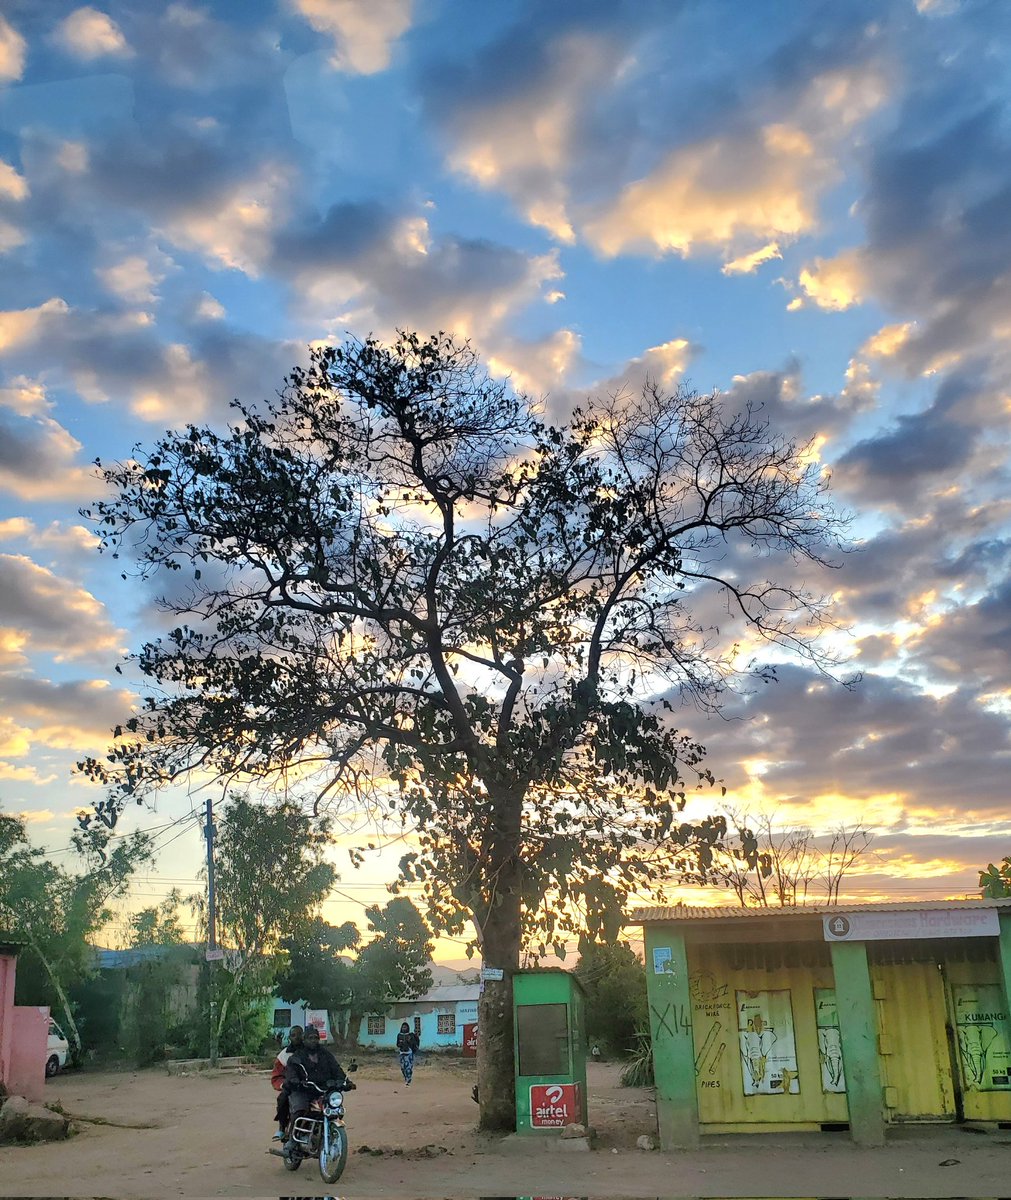 I love the Malawian sky, after all. Always beautiful!
やっぱりマラウイの空が好きです。いつ見ても美しい。
#malawian #malawiansky #beautifulsky #beautiful #sky #blantyre
#malawi #africa  #beautifulmalawi #beautifulafrica #空が好き #美しい空 #マラウイ #ブランタイヤ #アフリカ